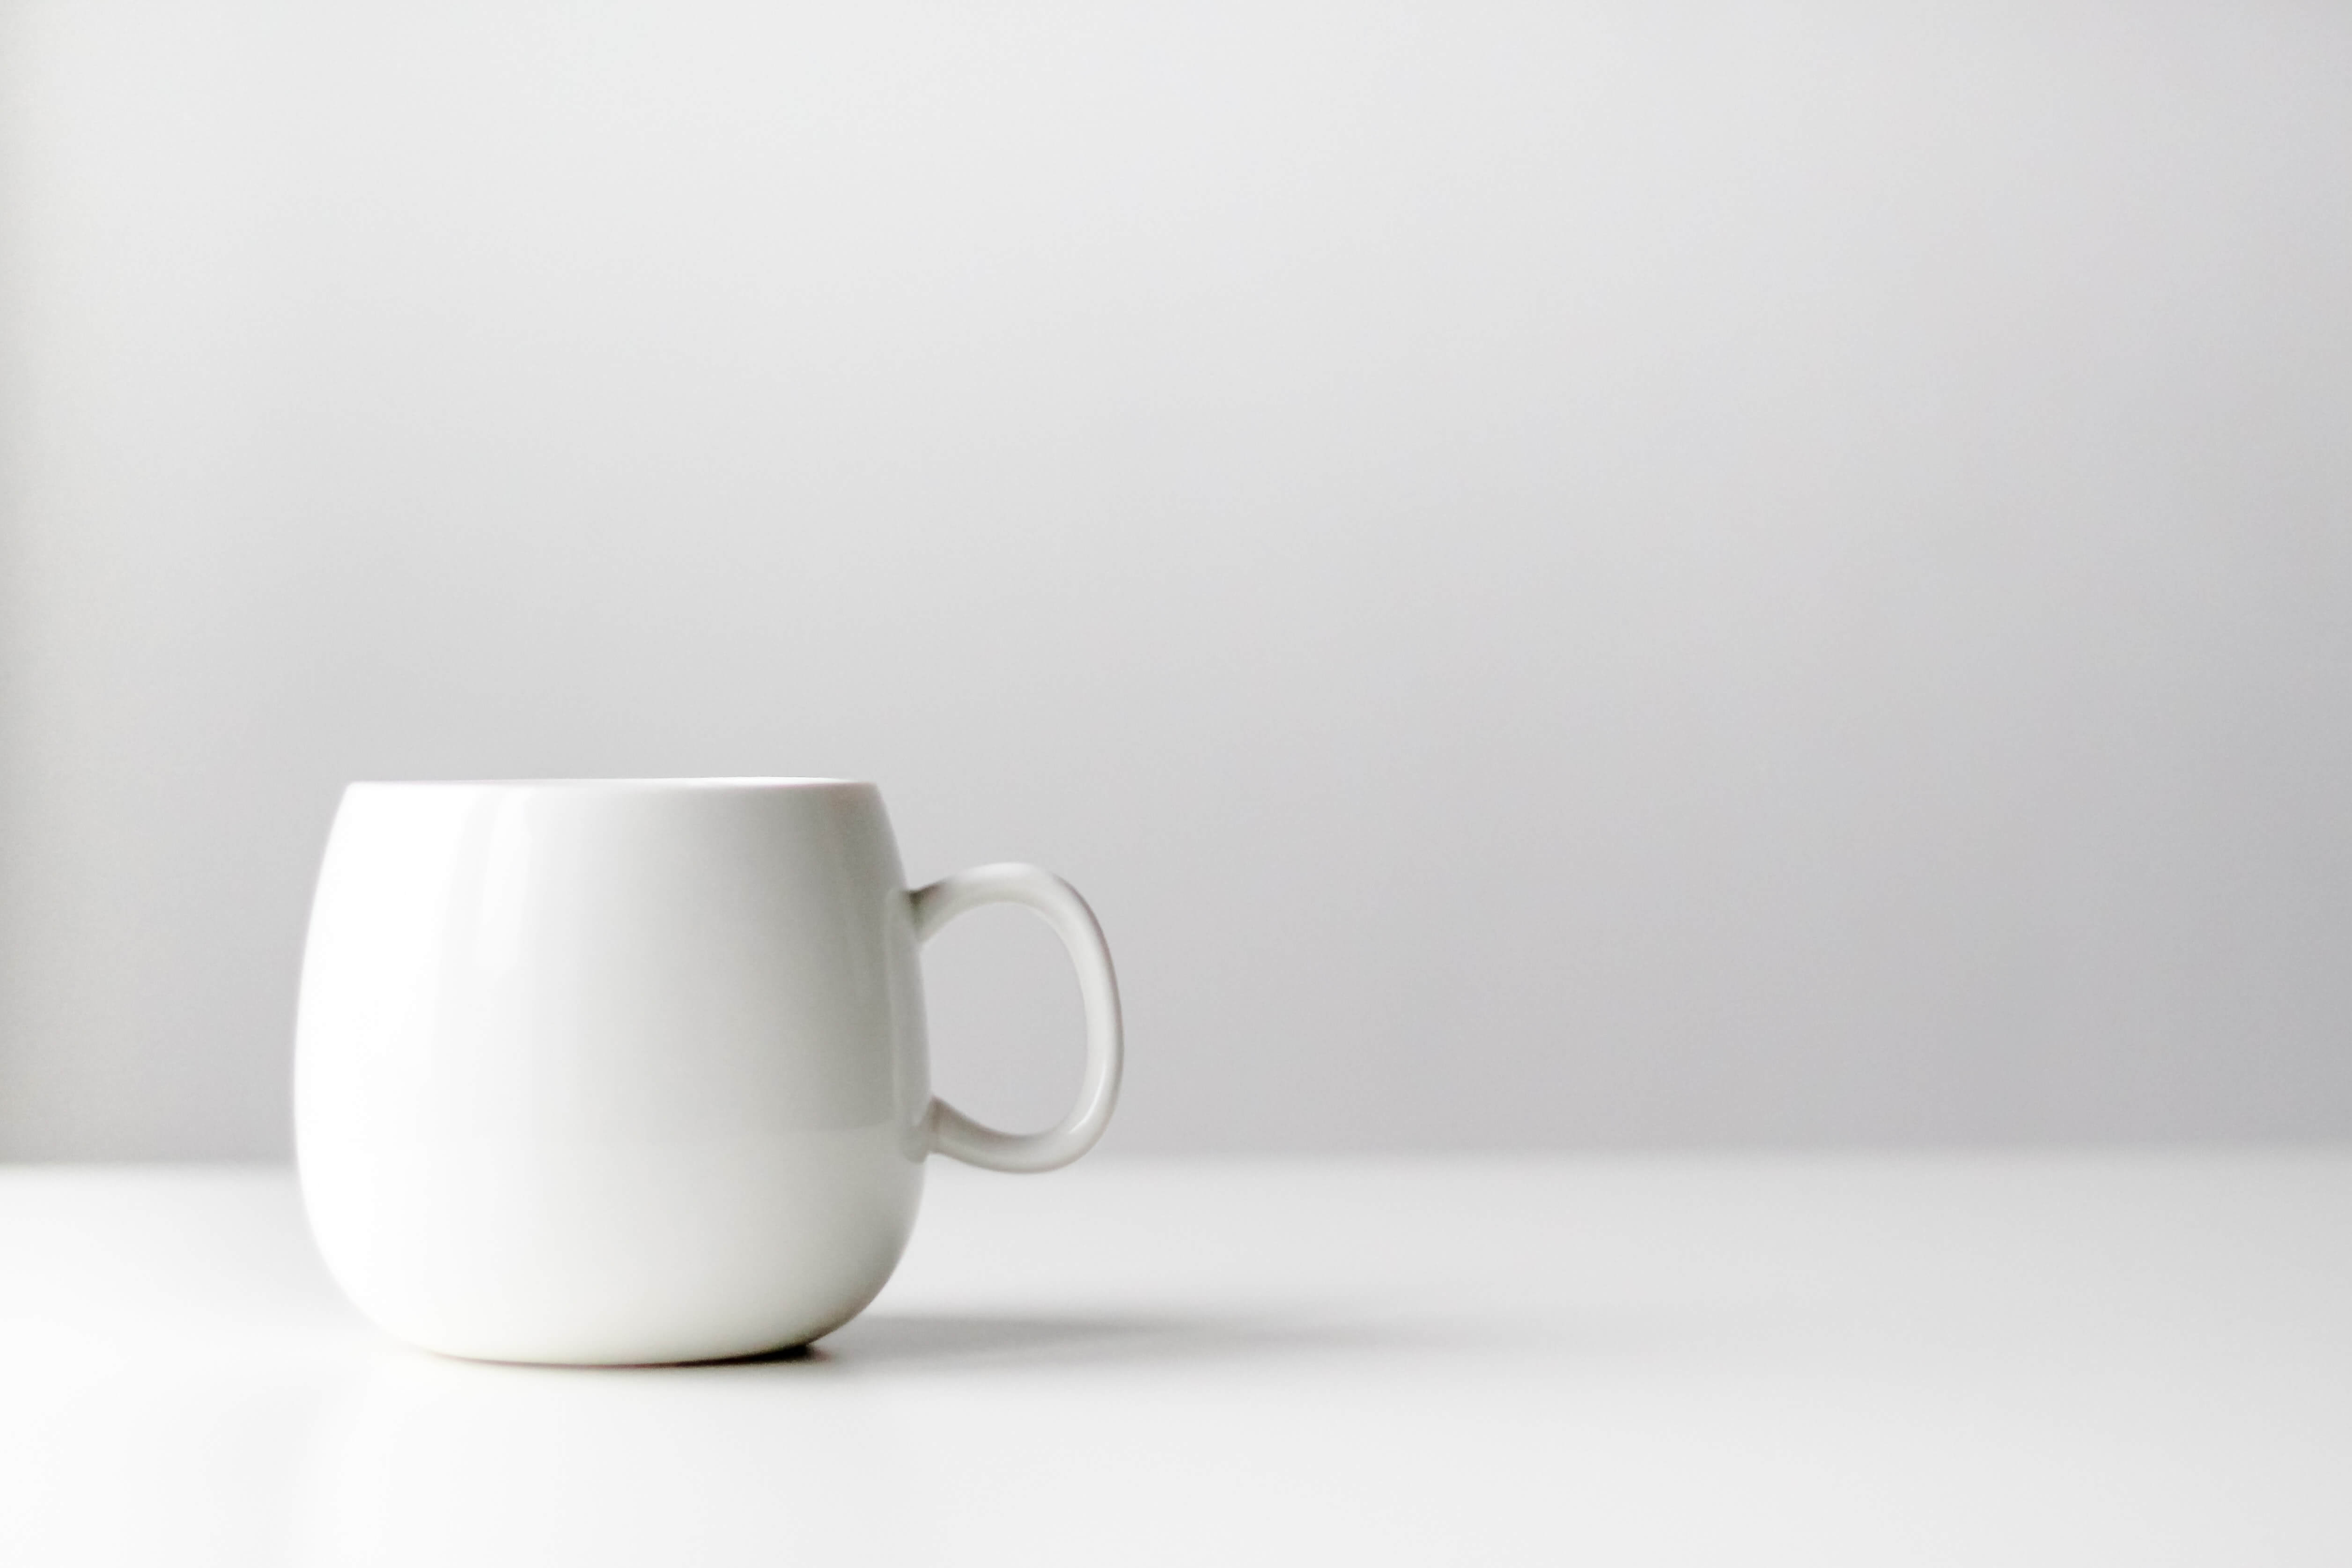 A mug on a white table